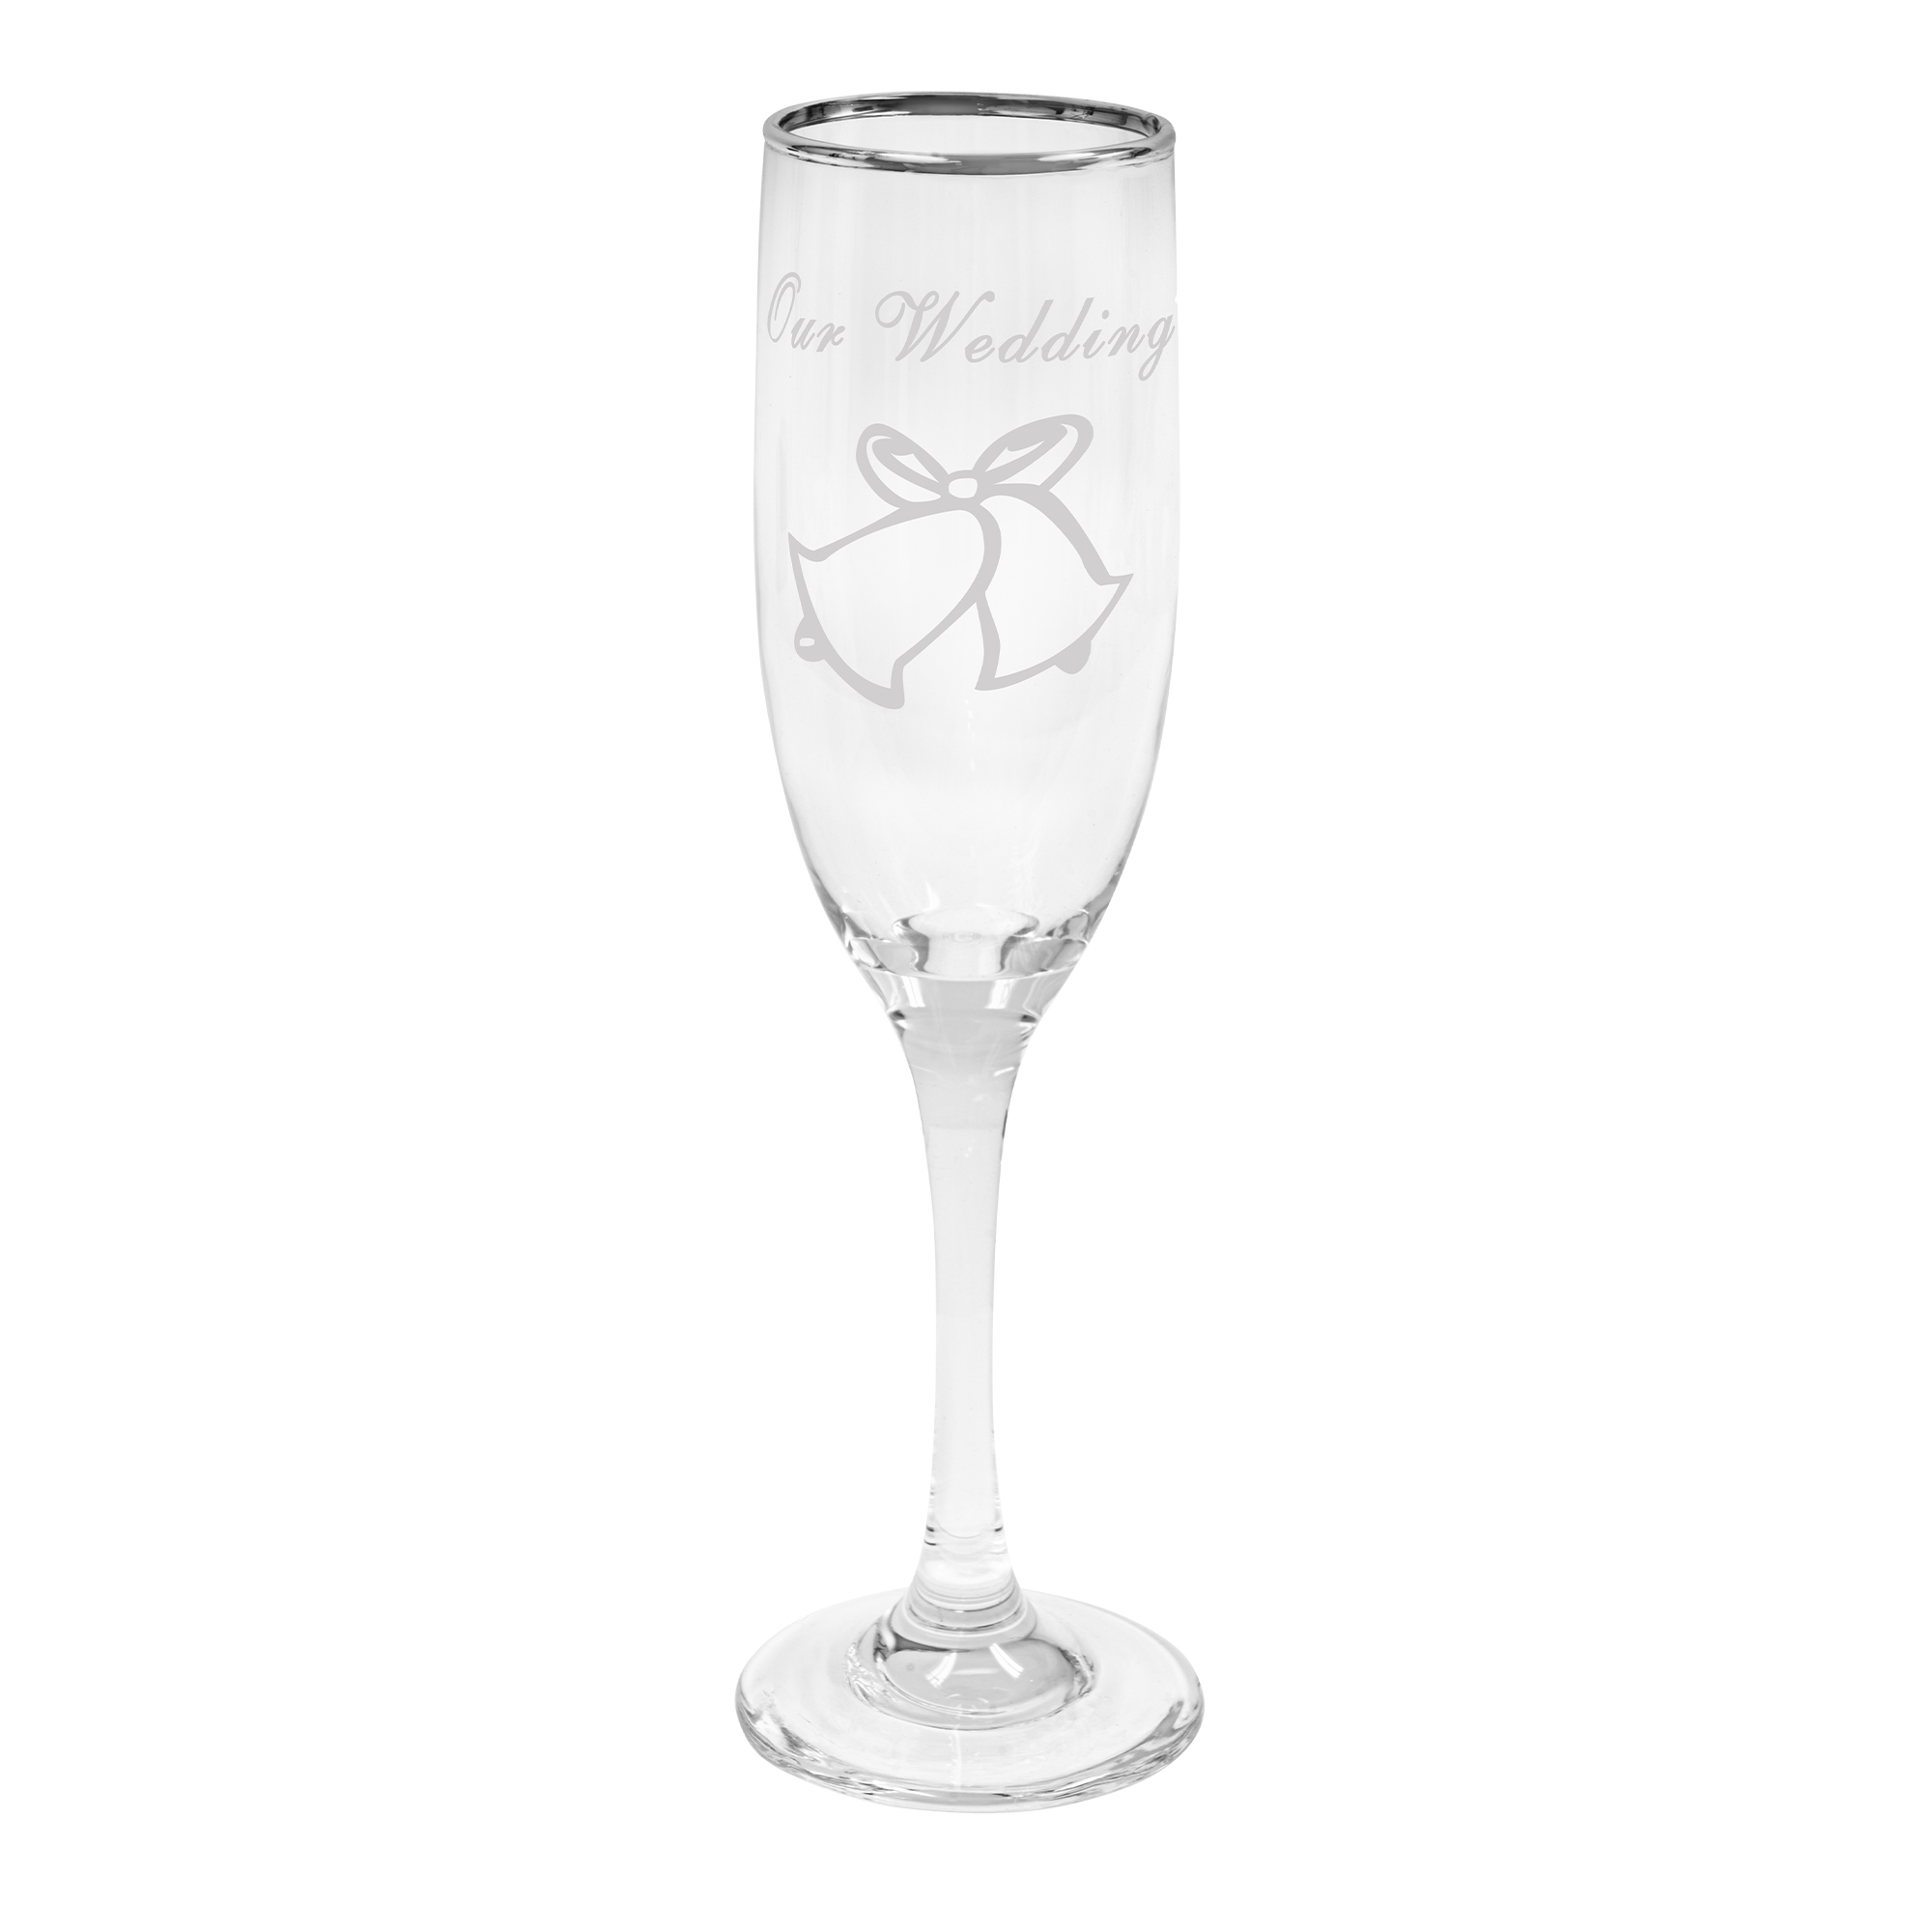 Glass Champagne Flutes Silver Rim- "Our Wedding" Set of 6pcs